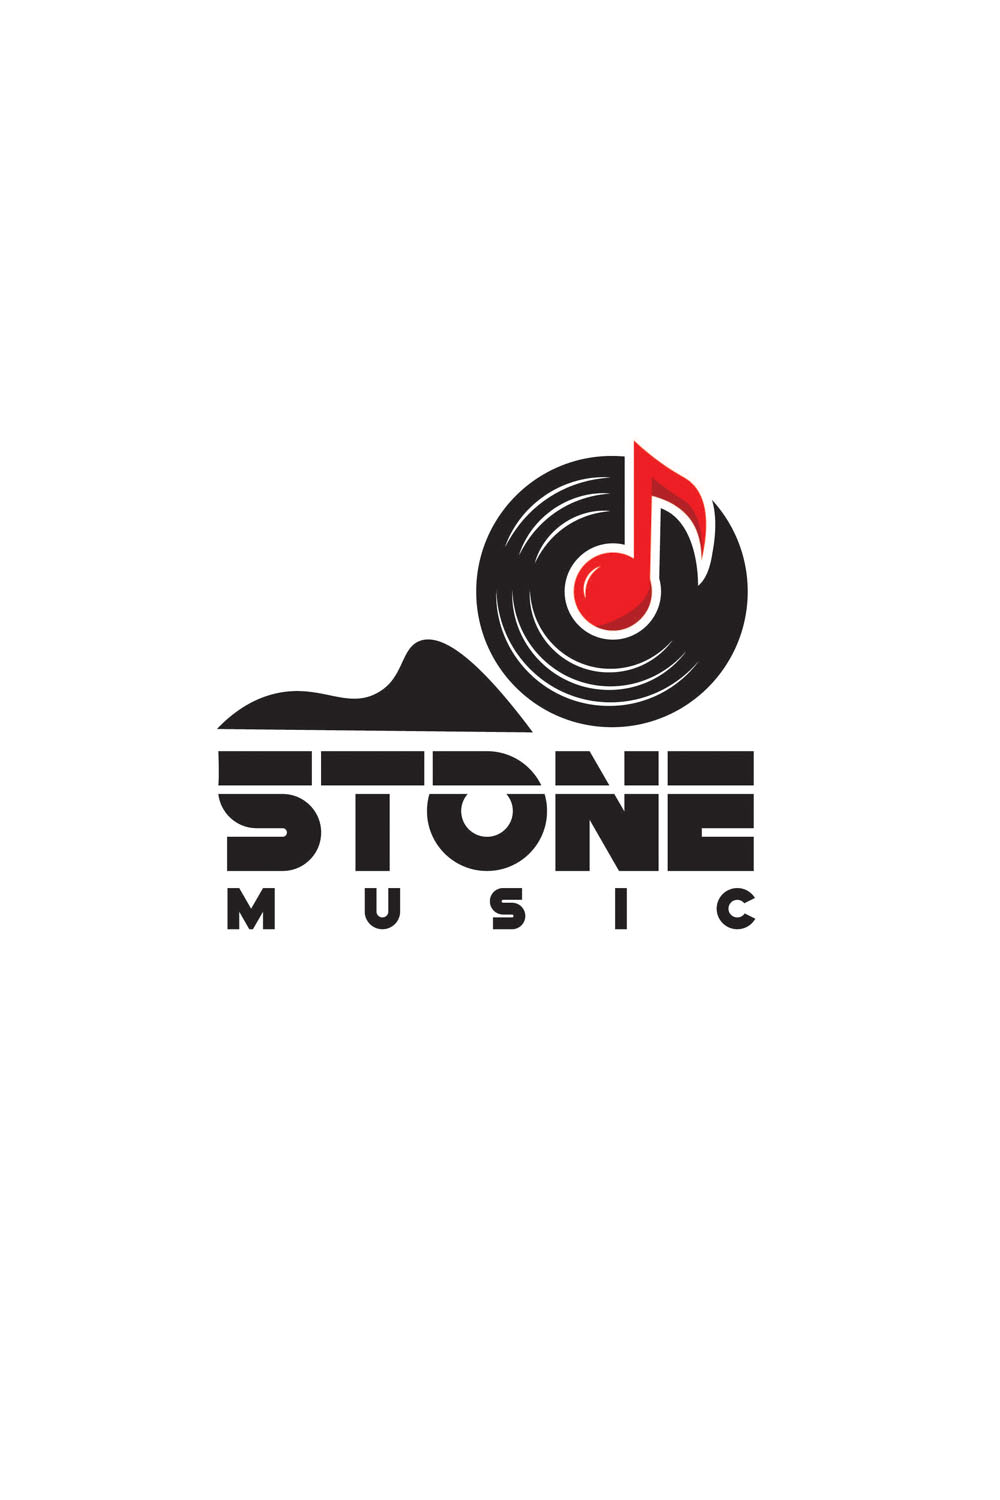 Modern Music Logo Design pinterest preview image.